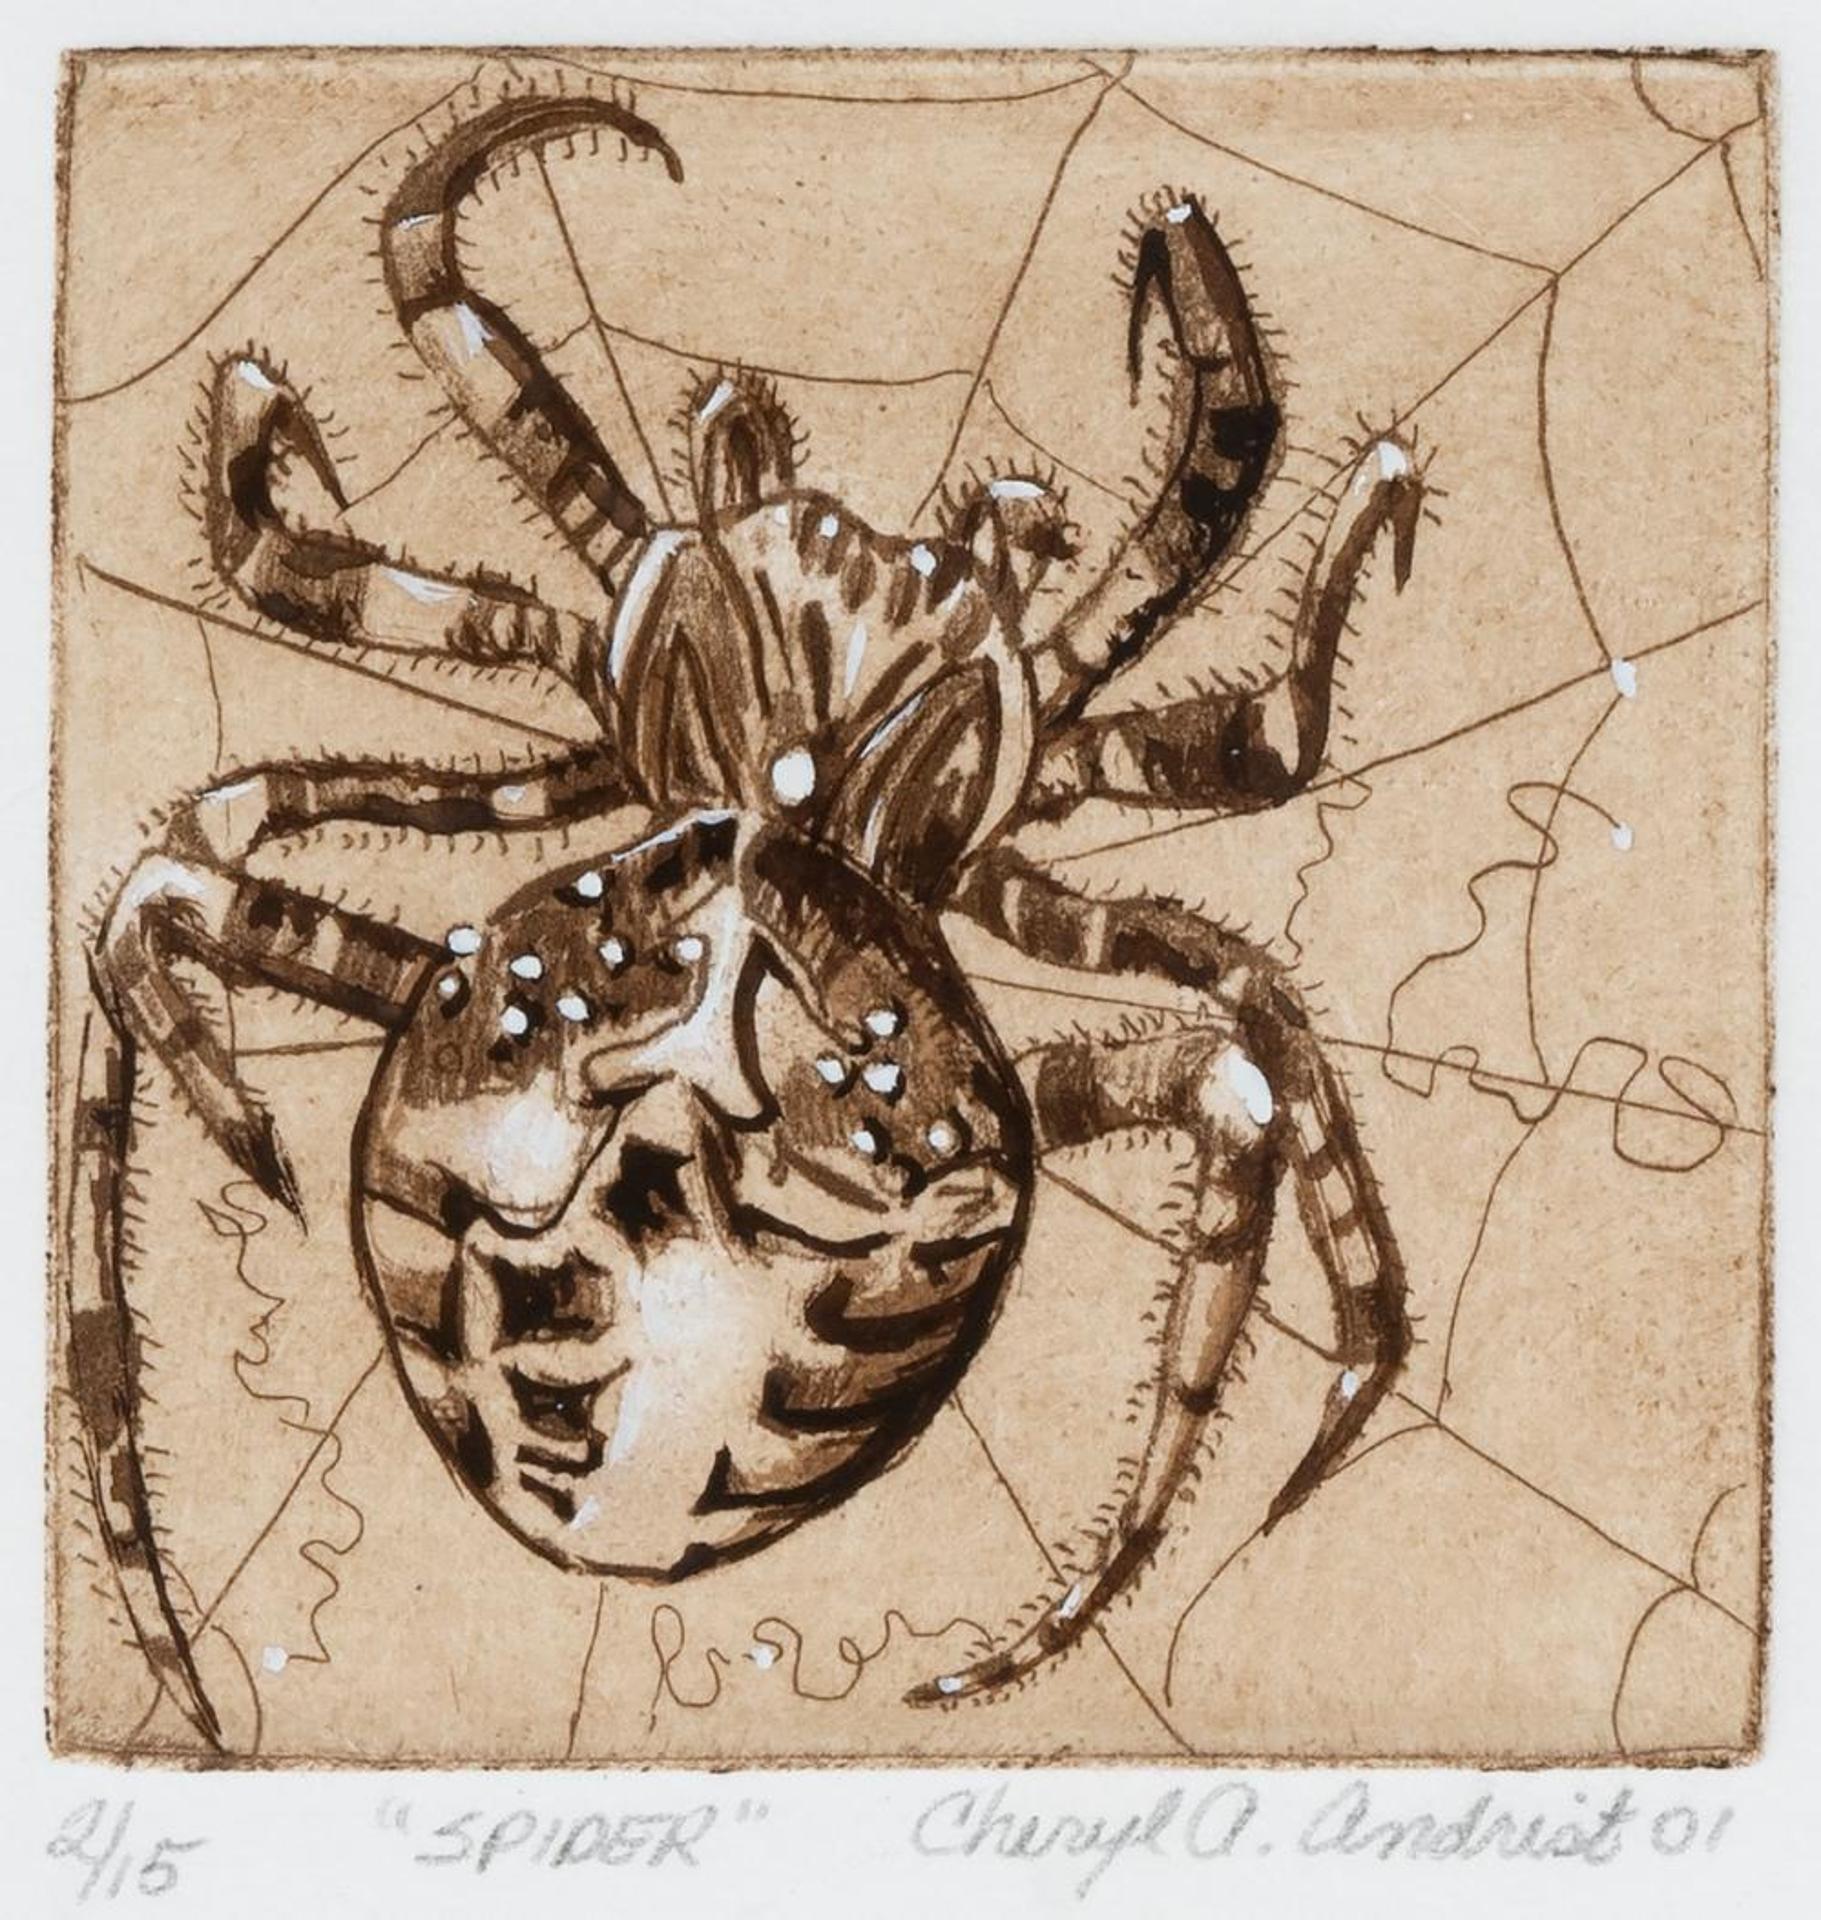 Cheryl Andrist (1945) - Spider